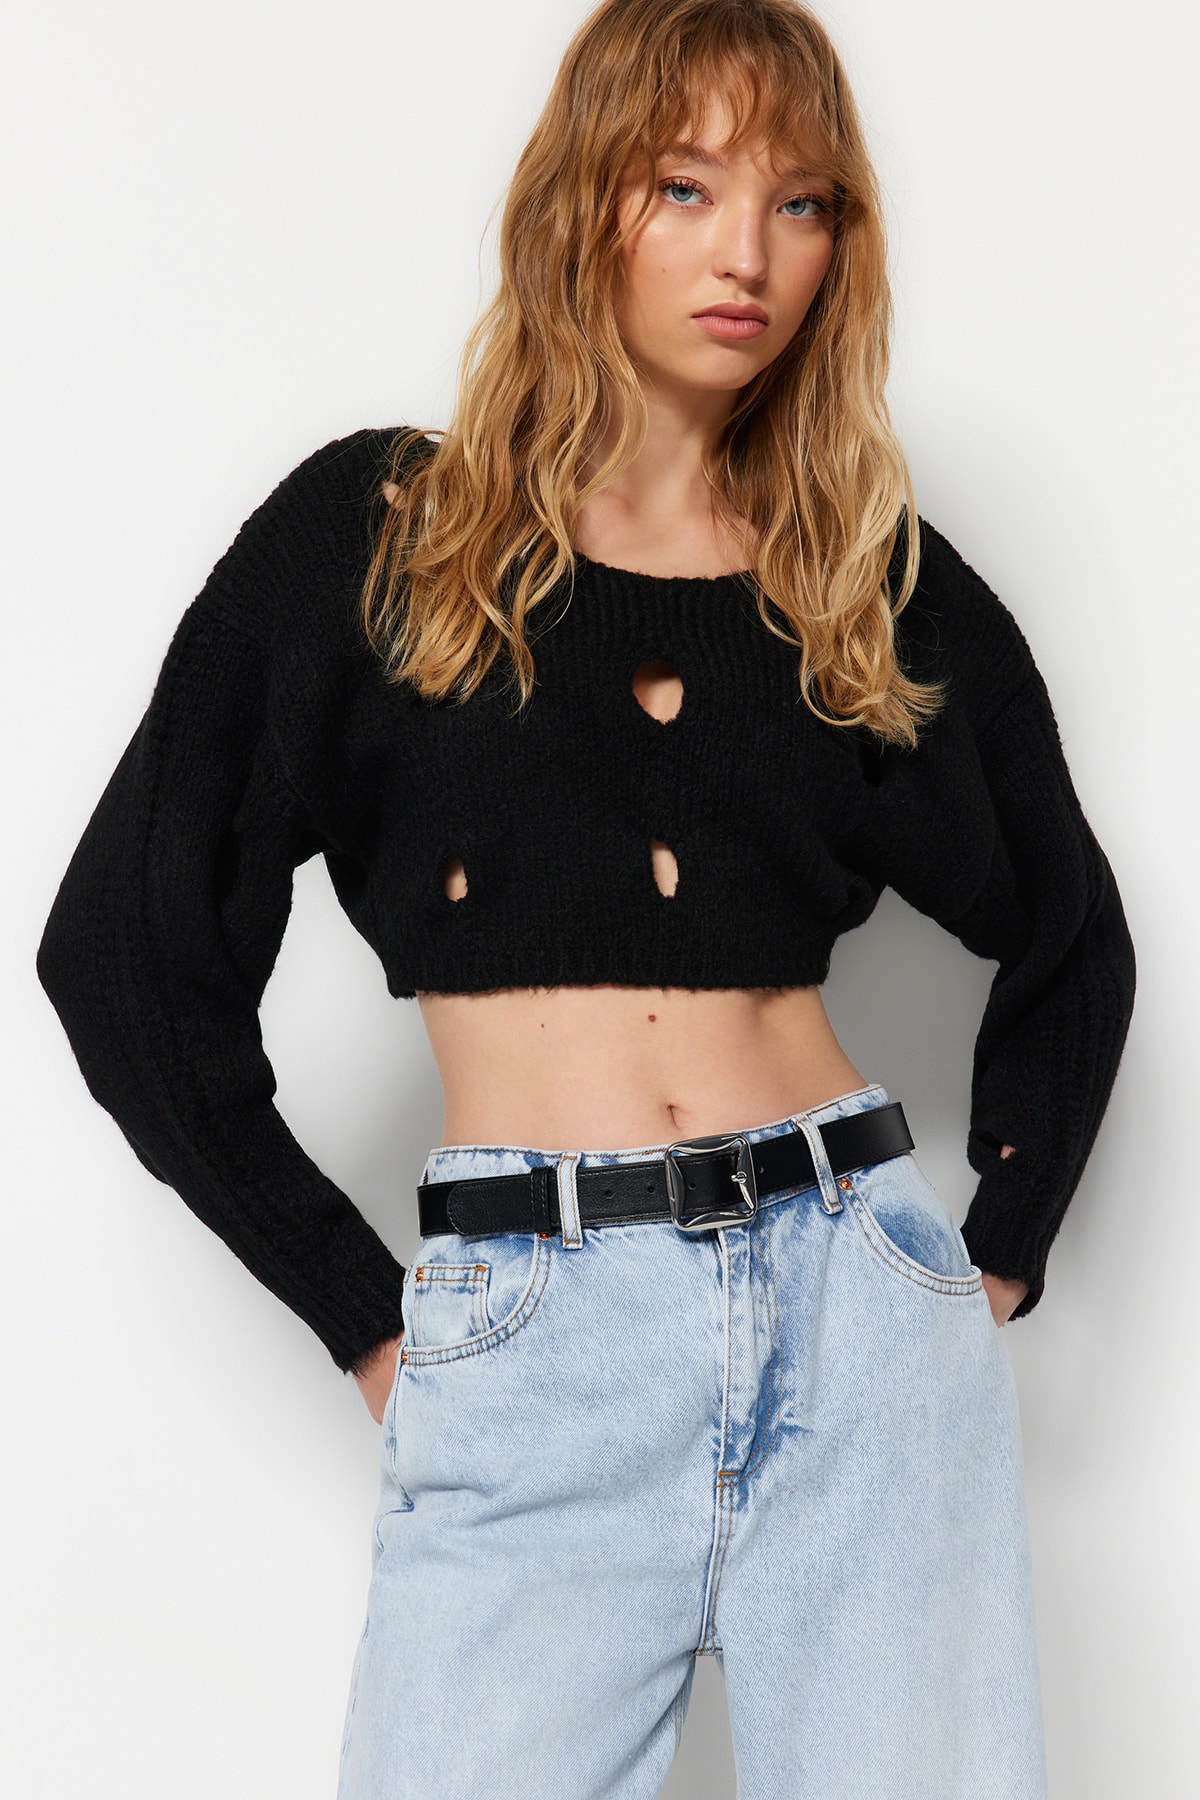 Trendyol Black Super Crop Soft Textured Window/Cut Out Knitwear Sweater